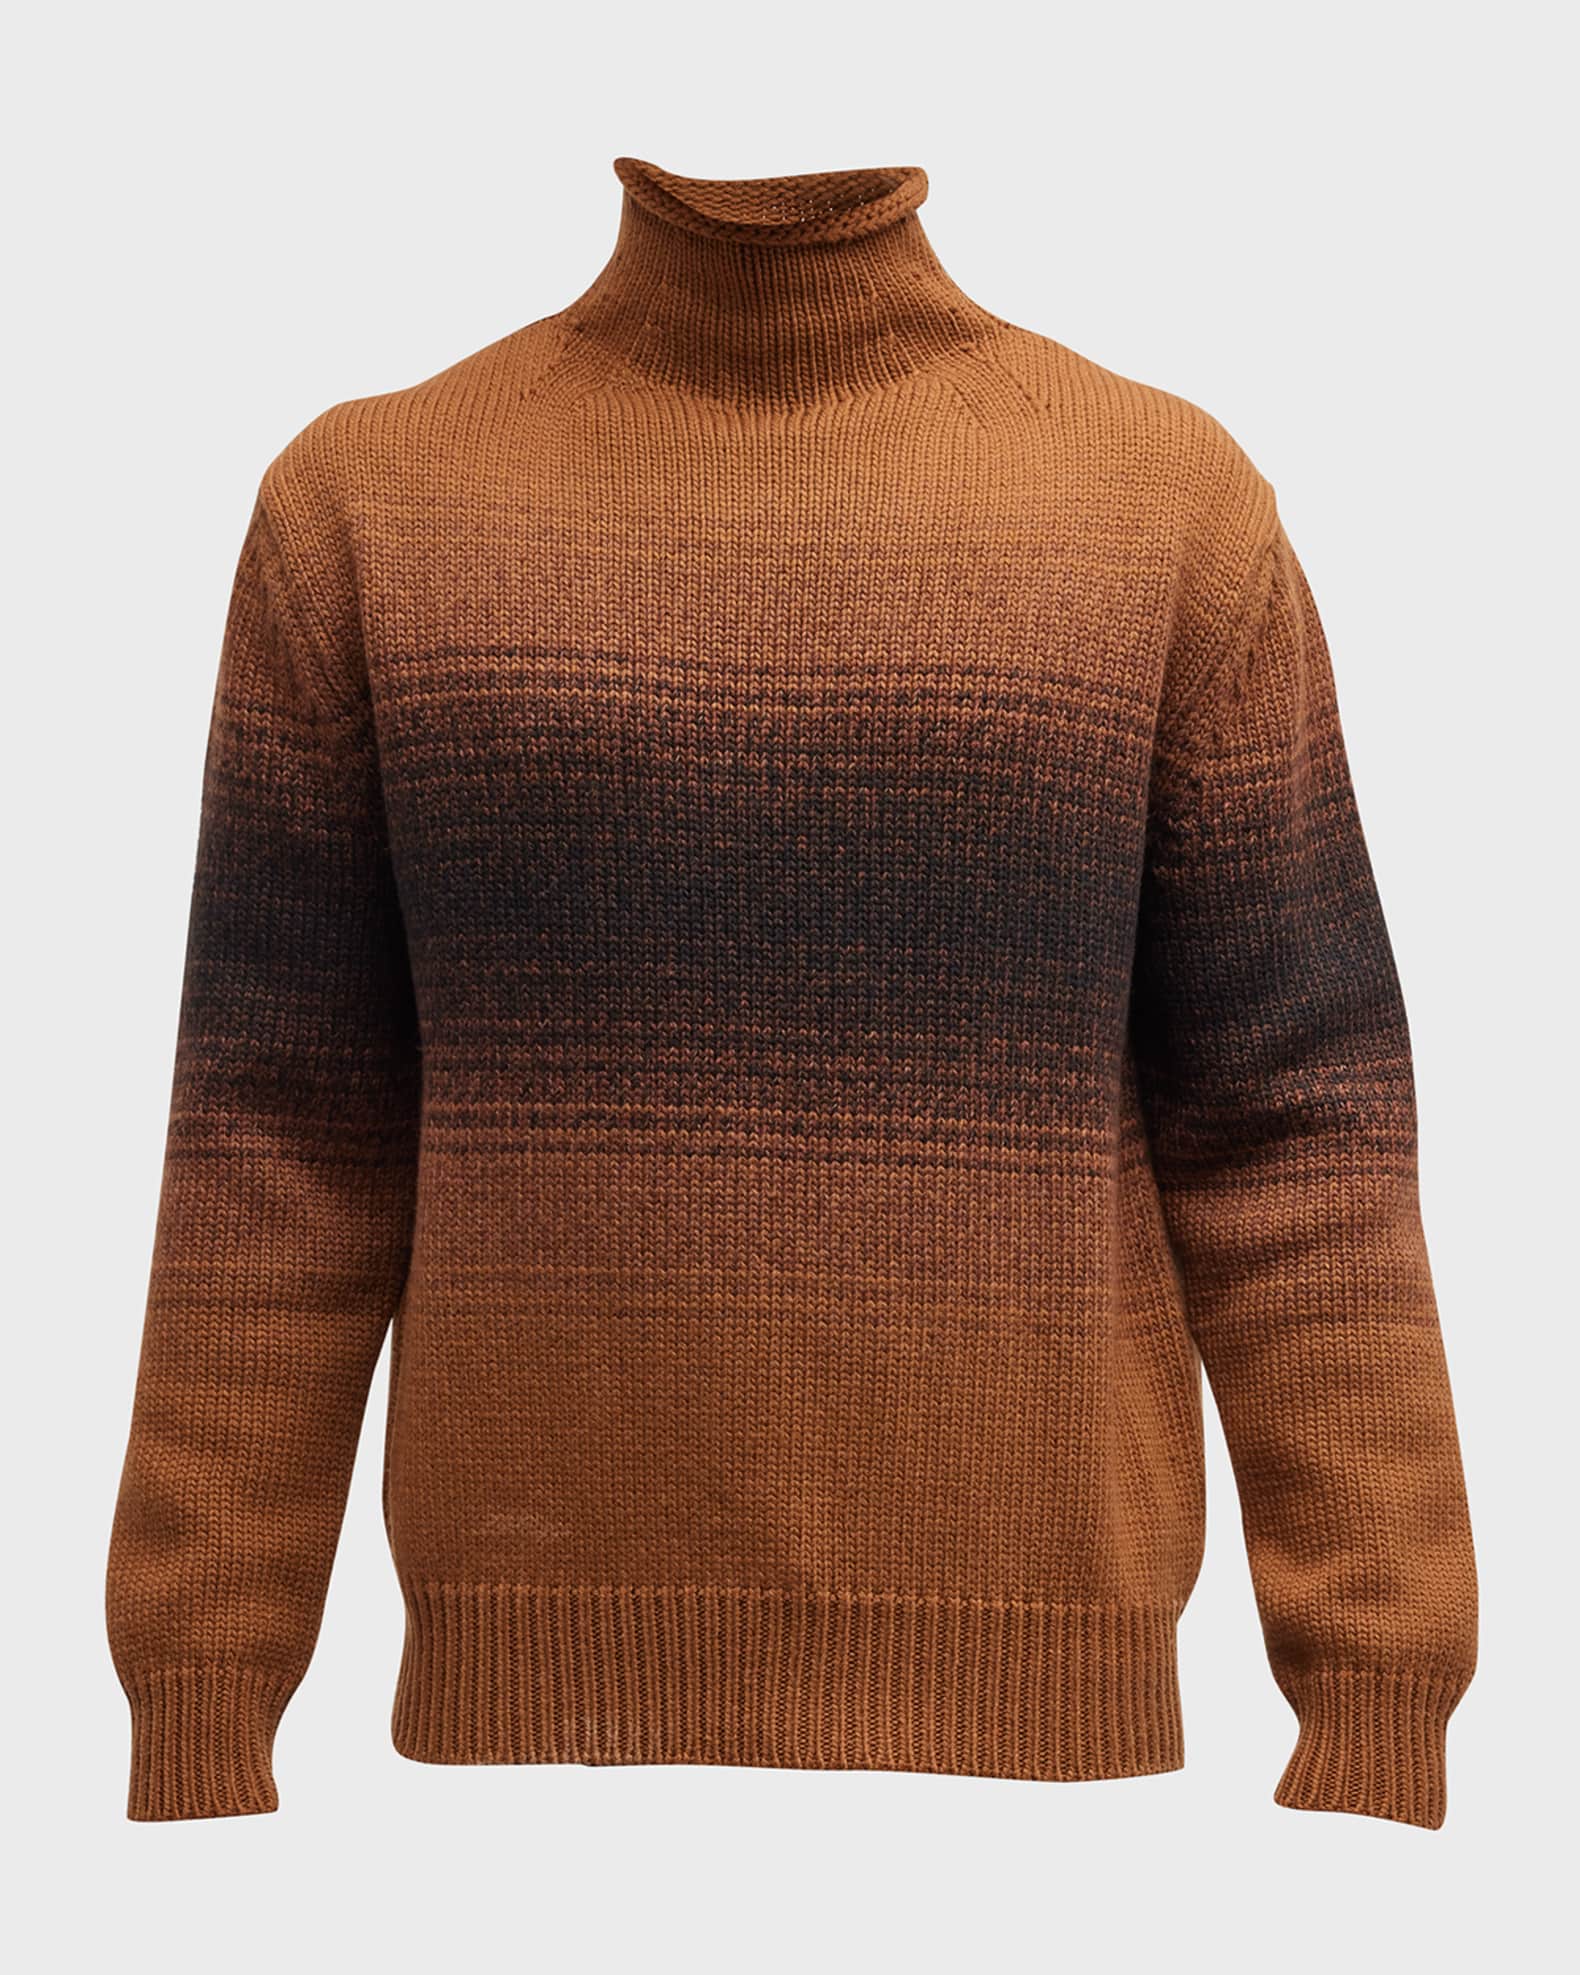 ZEGNA Men's Degradé Stripe Turtleneck Sweater | Neiman Marcus